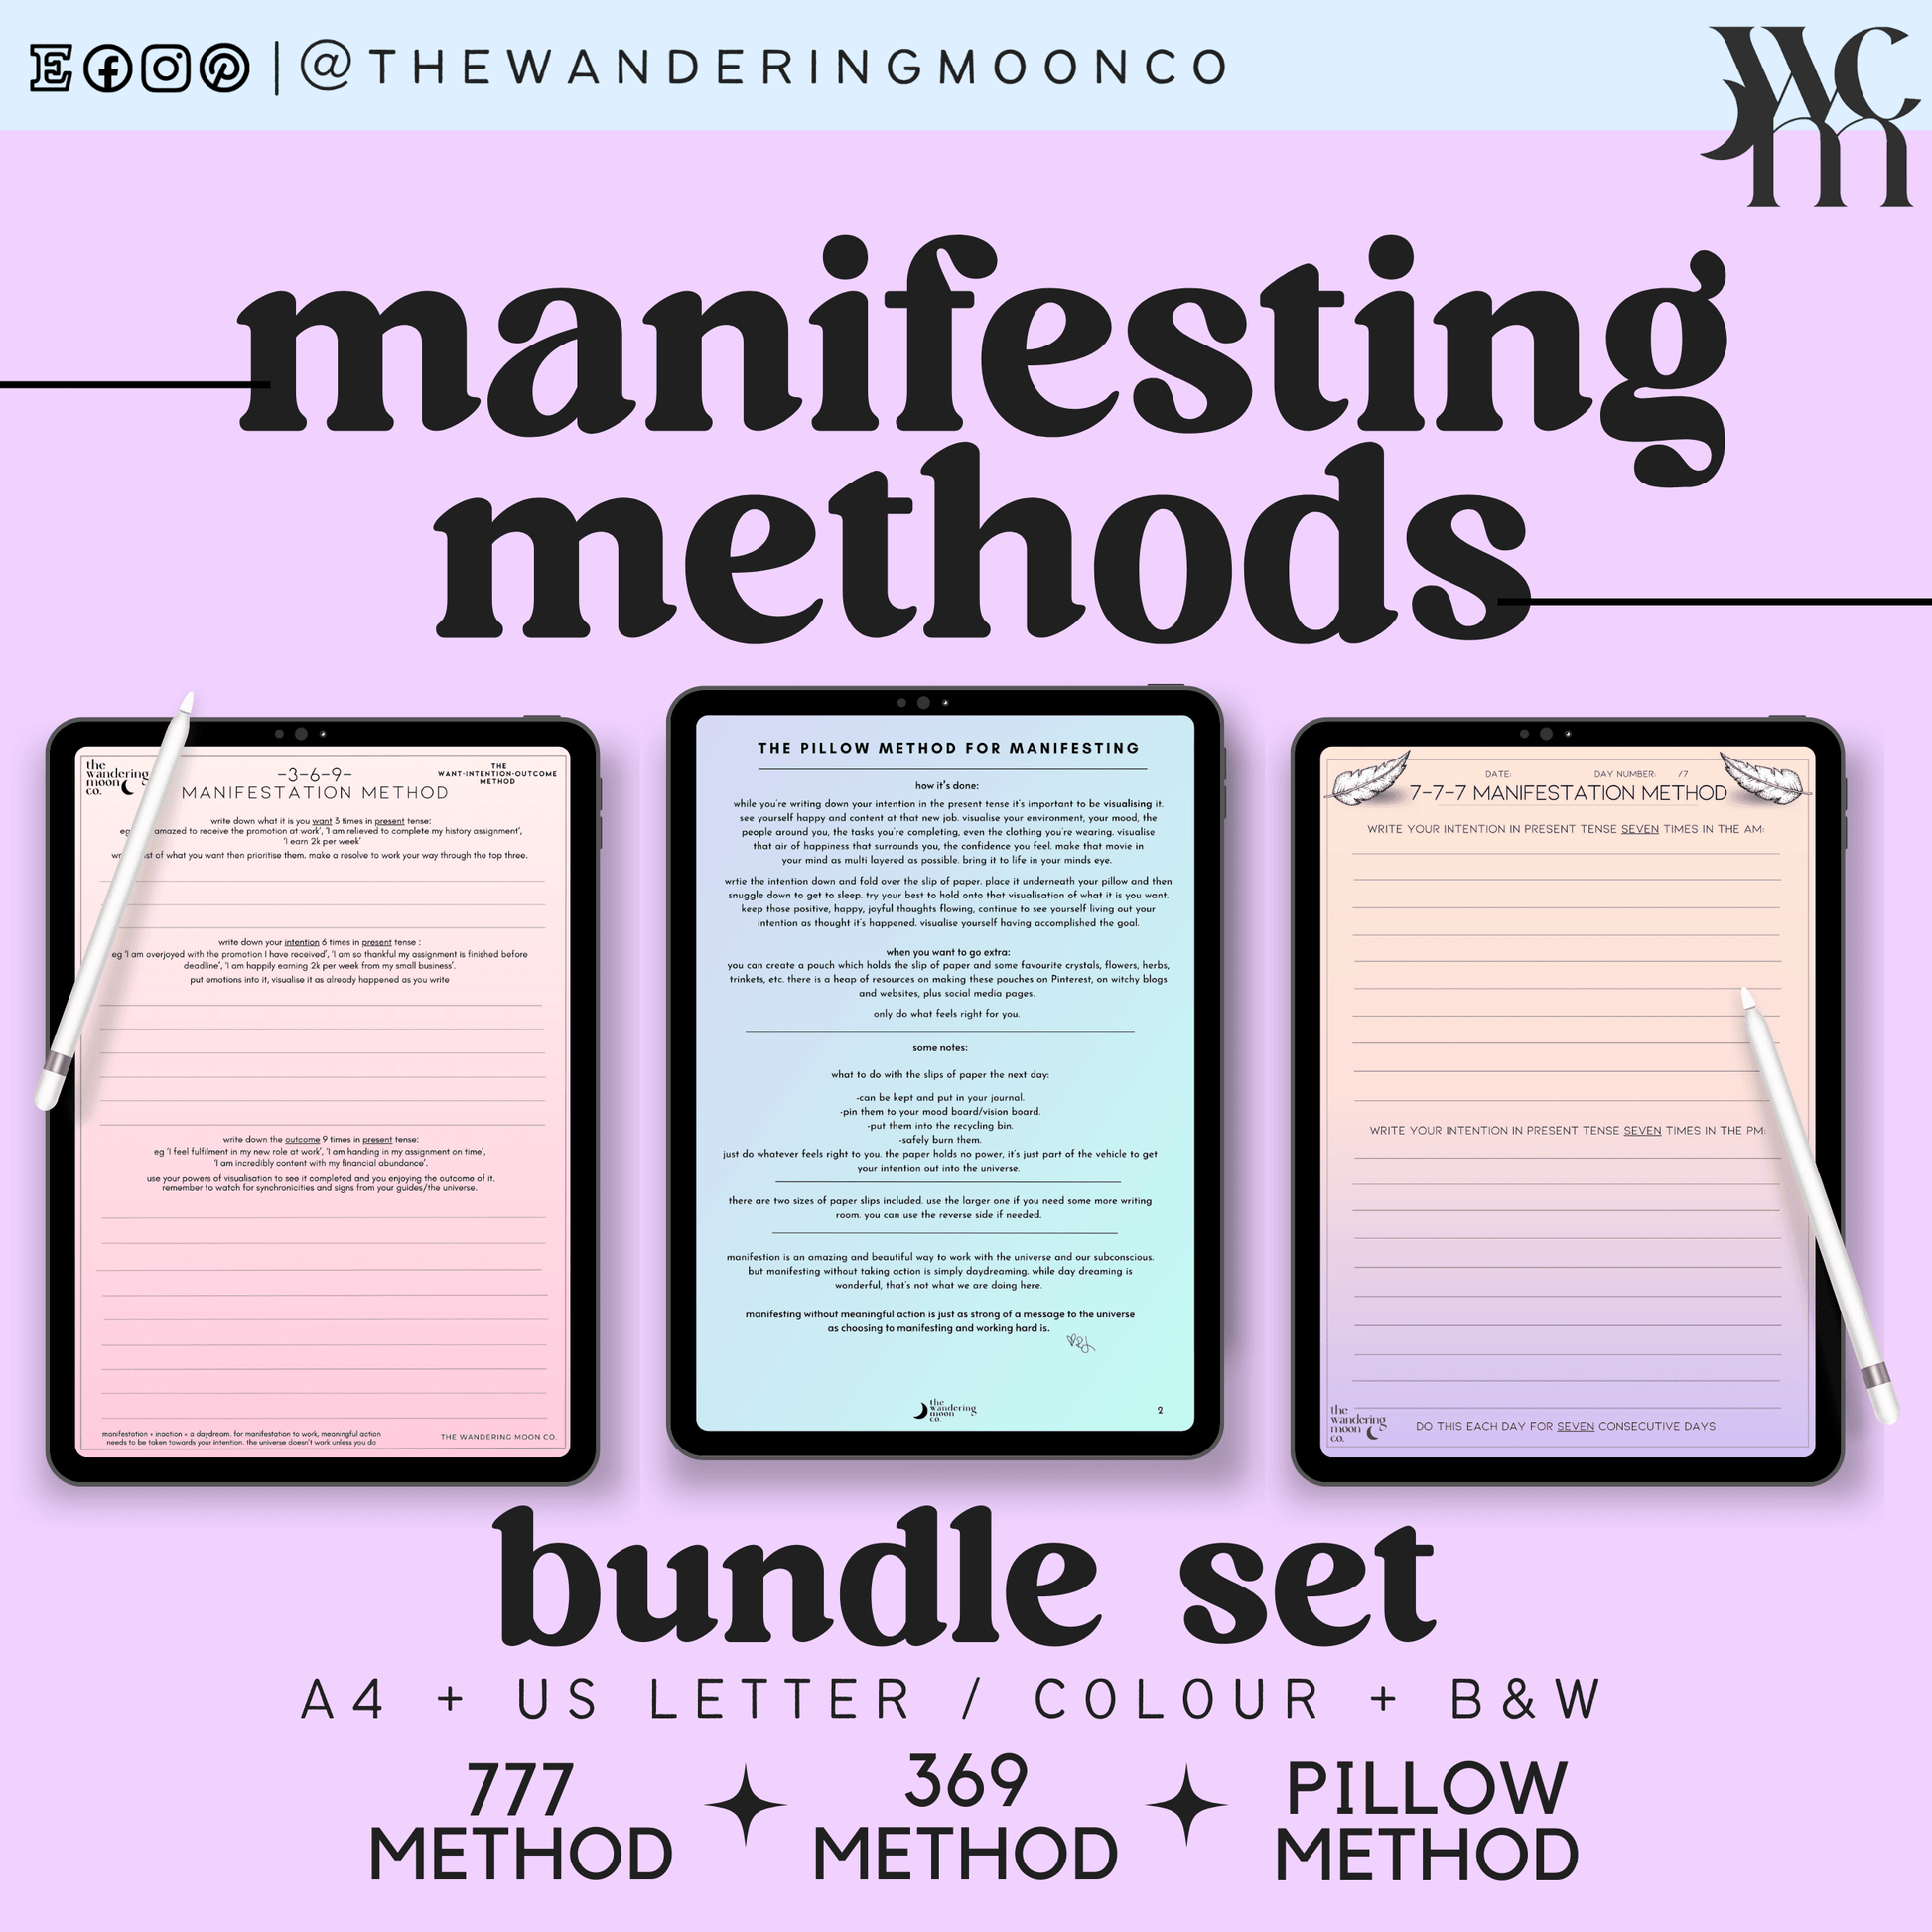 manifesting methods set: 369, 777, pillow method journal - The Wandering Moon Co.